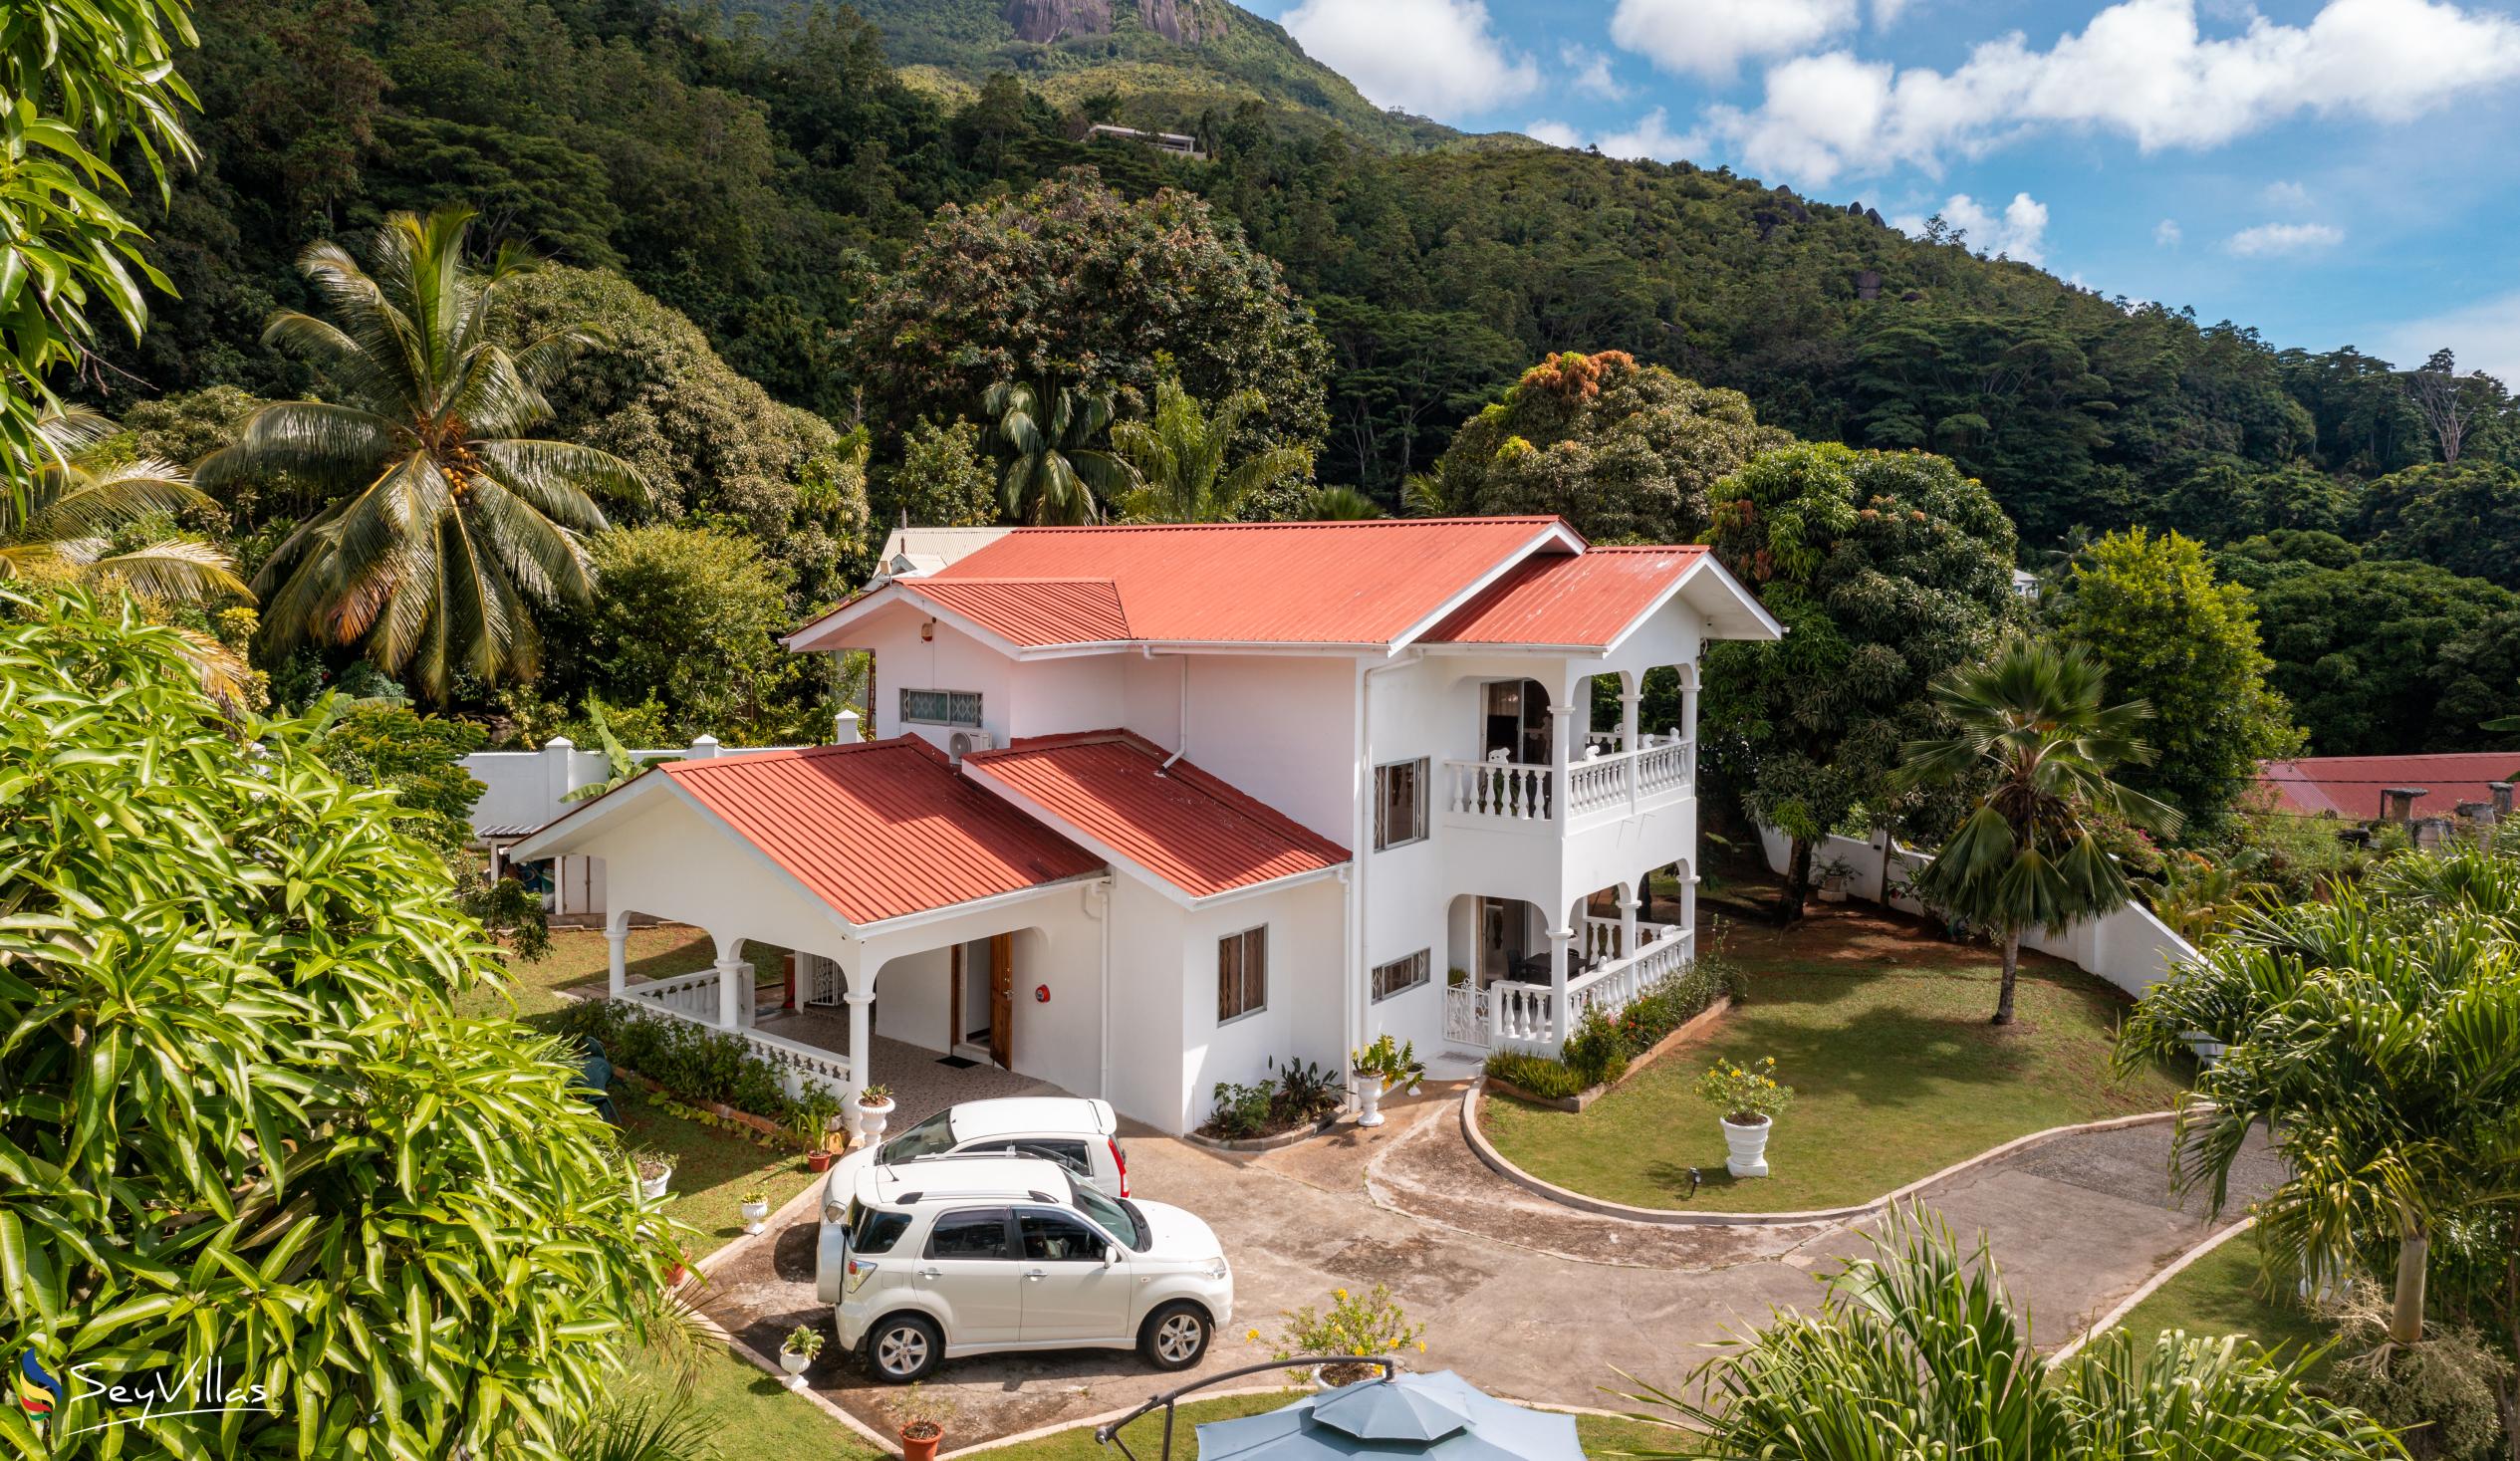 Photo 1: Villa Verde - Outdoor area - Mahé (Seychelles)